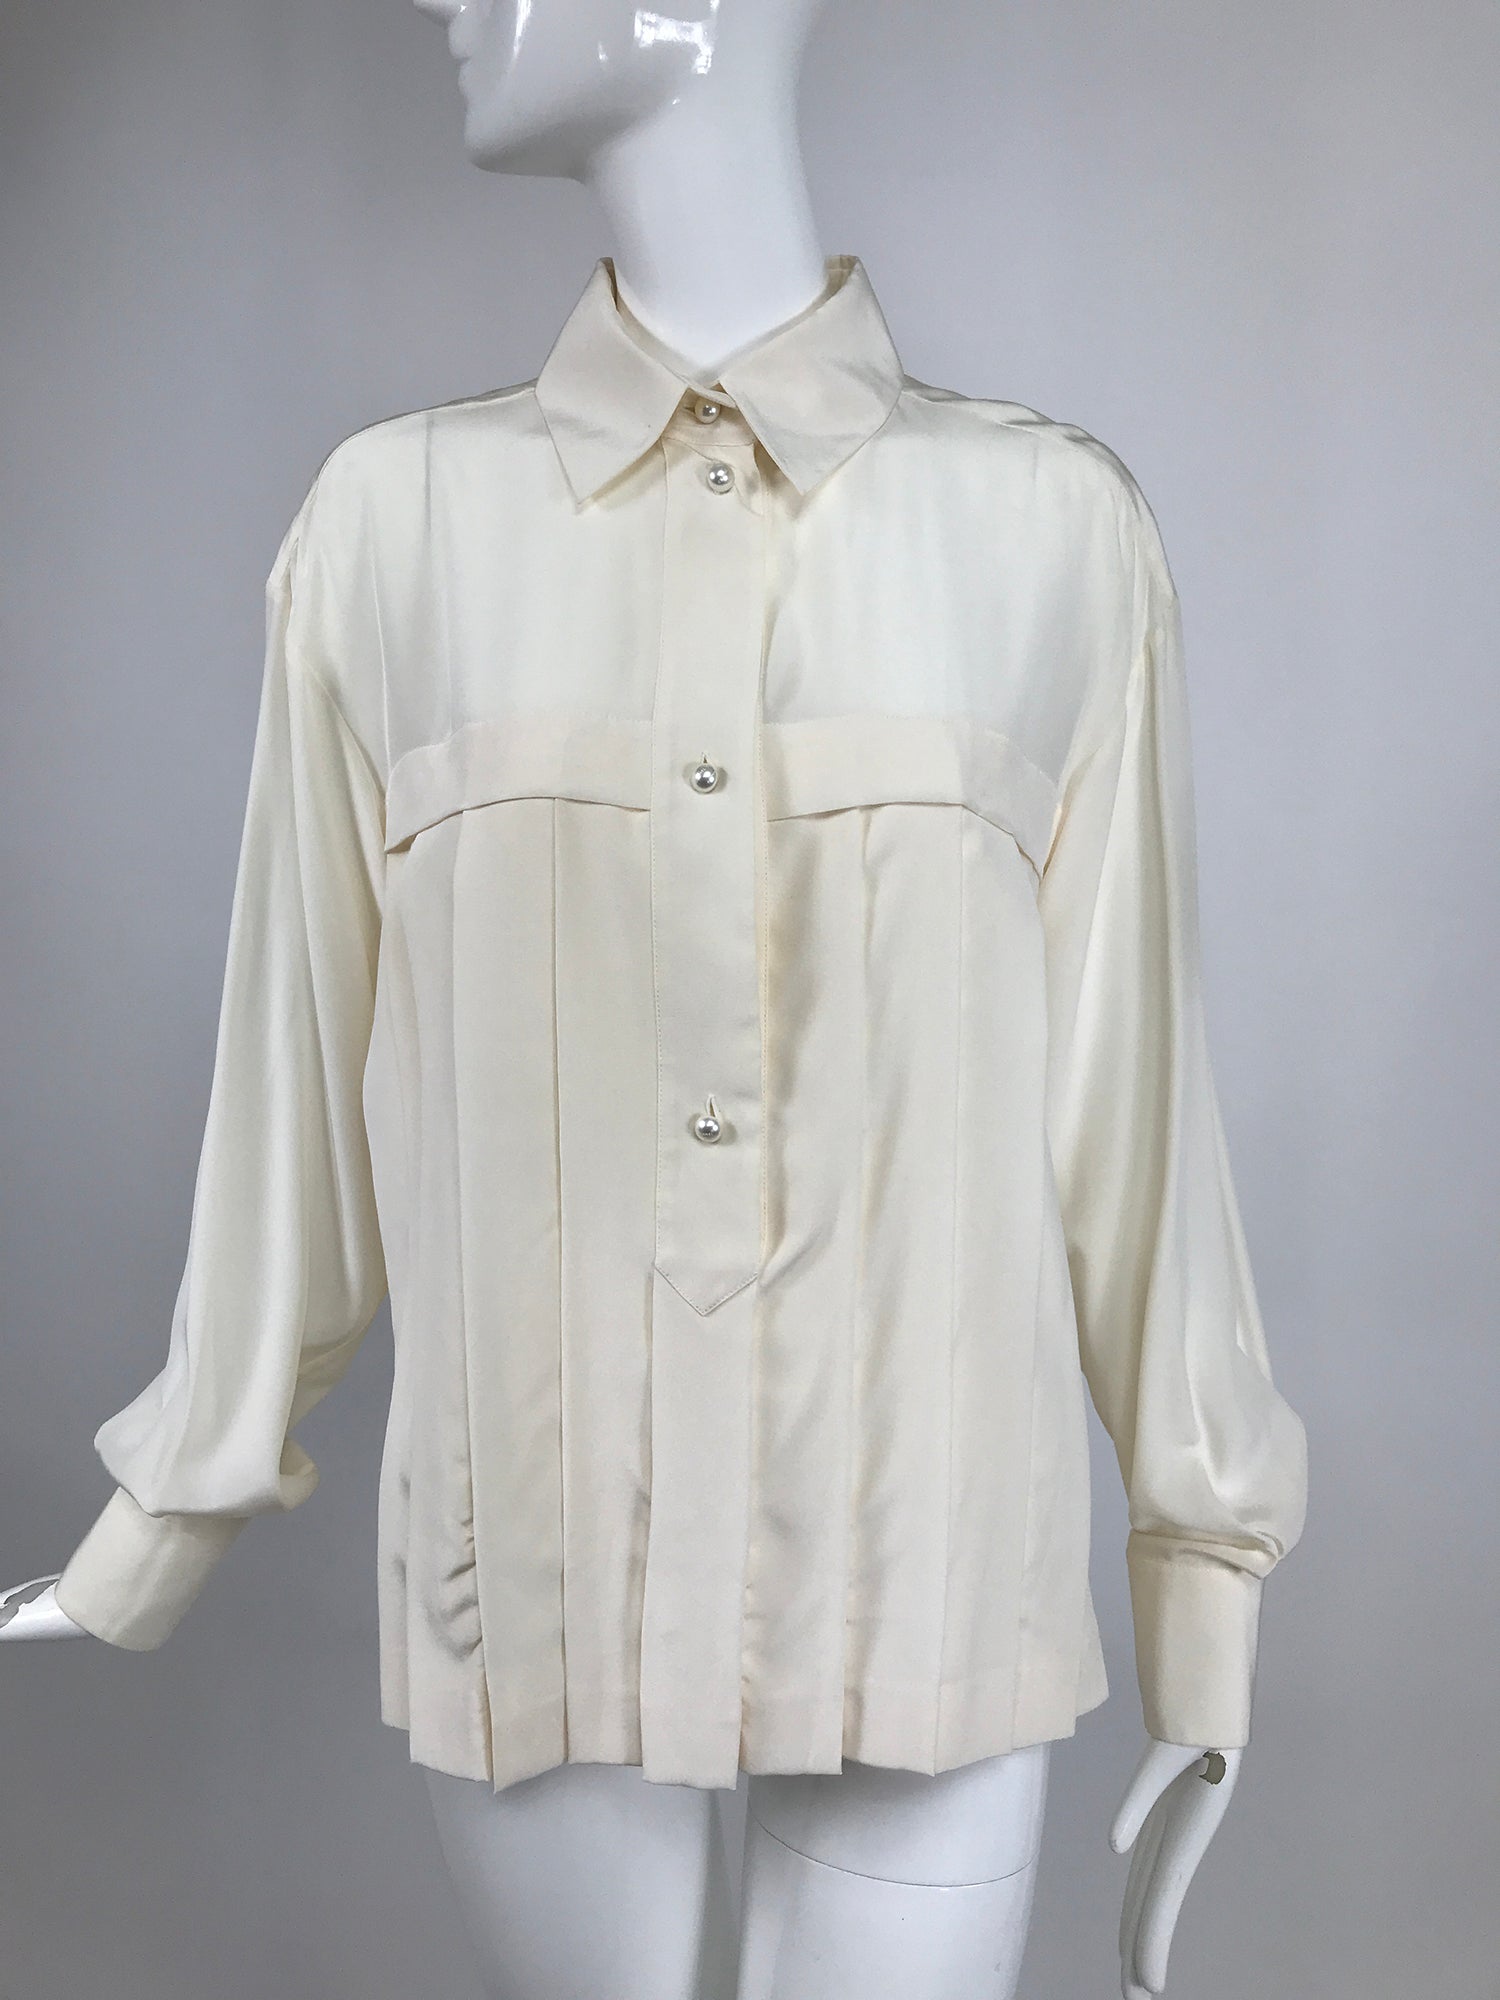 vintage chanel white dress shirt